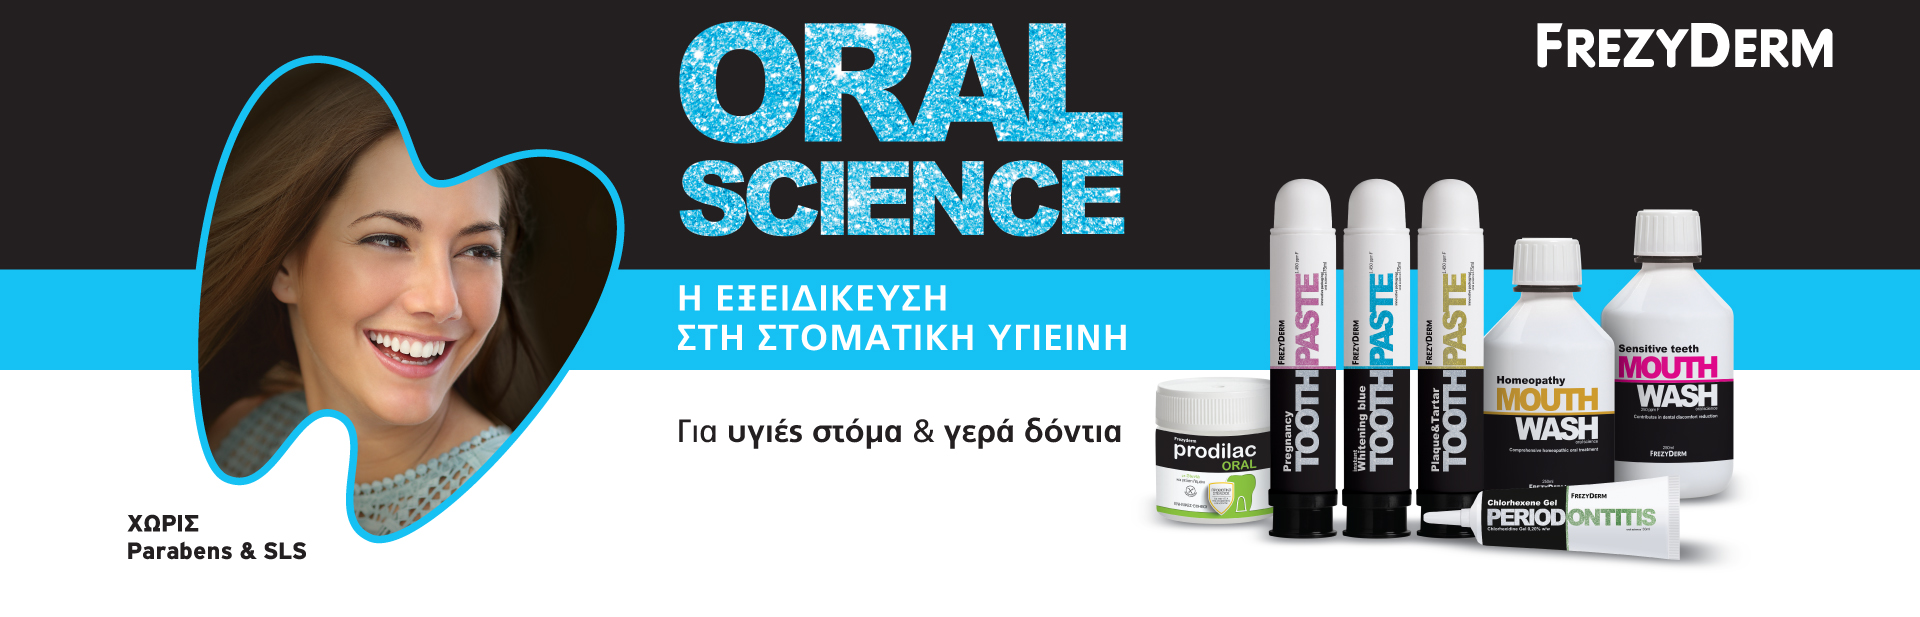 Frezyderm - Oral Science